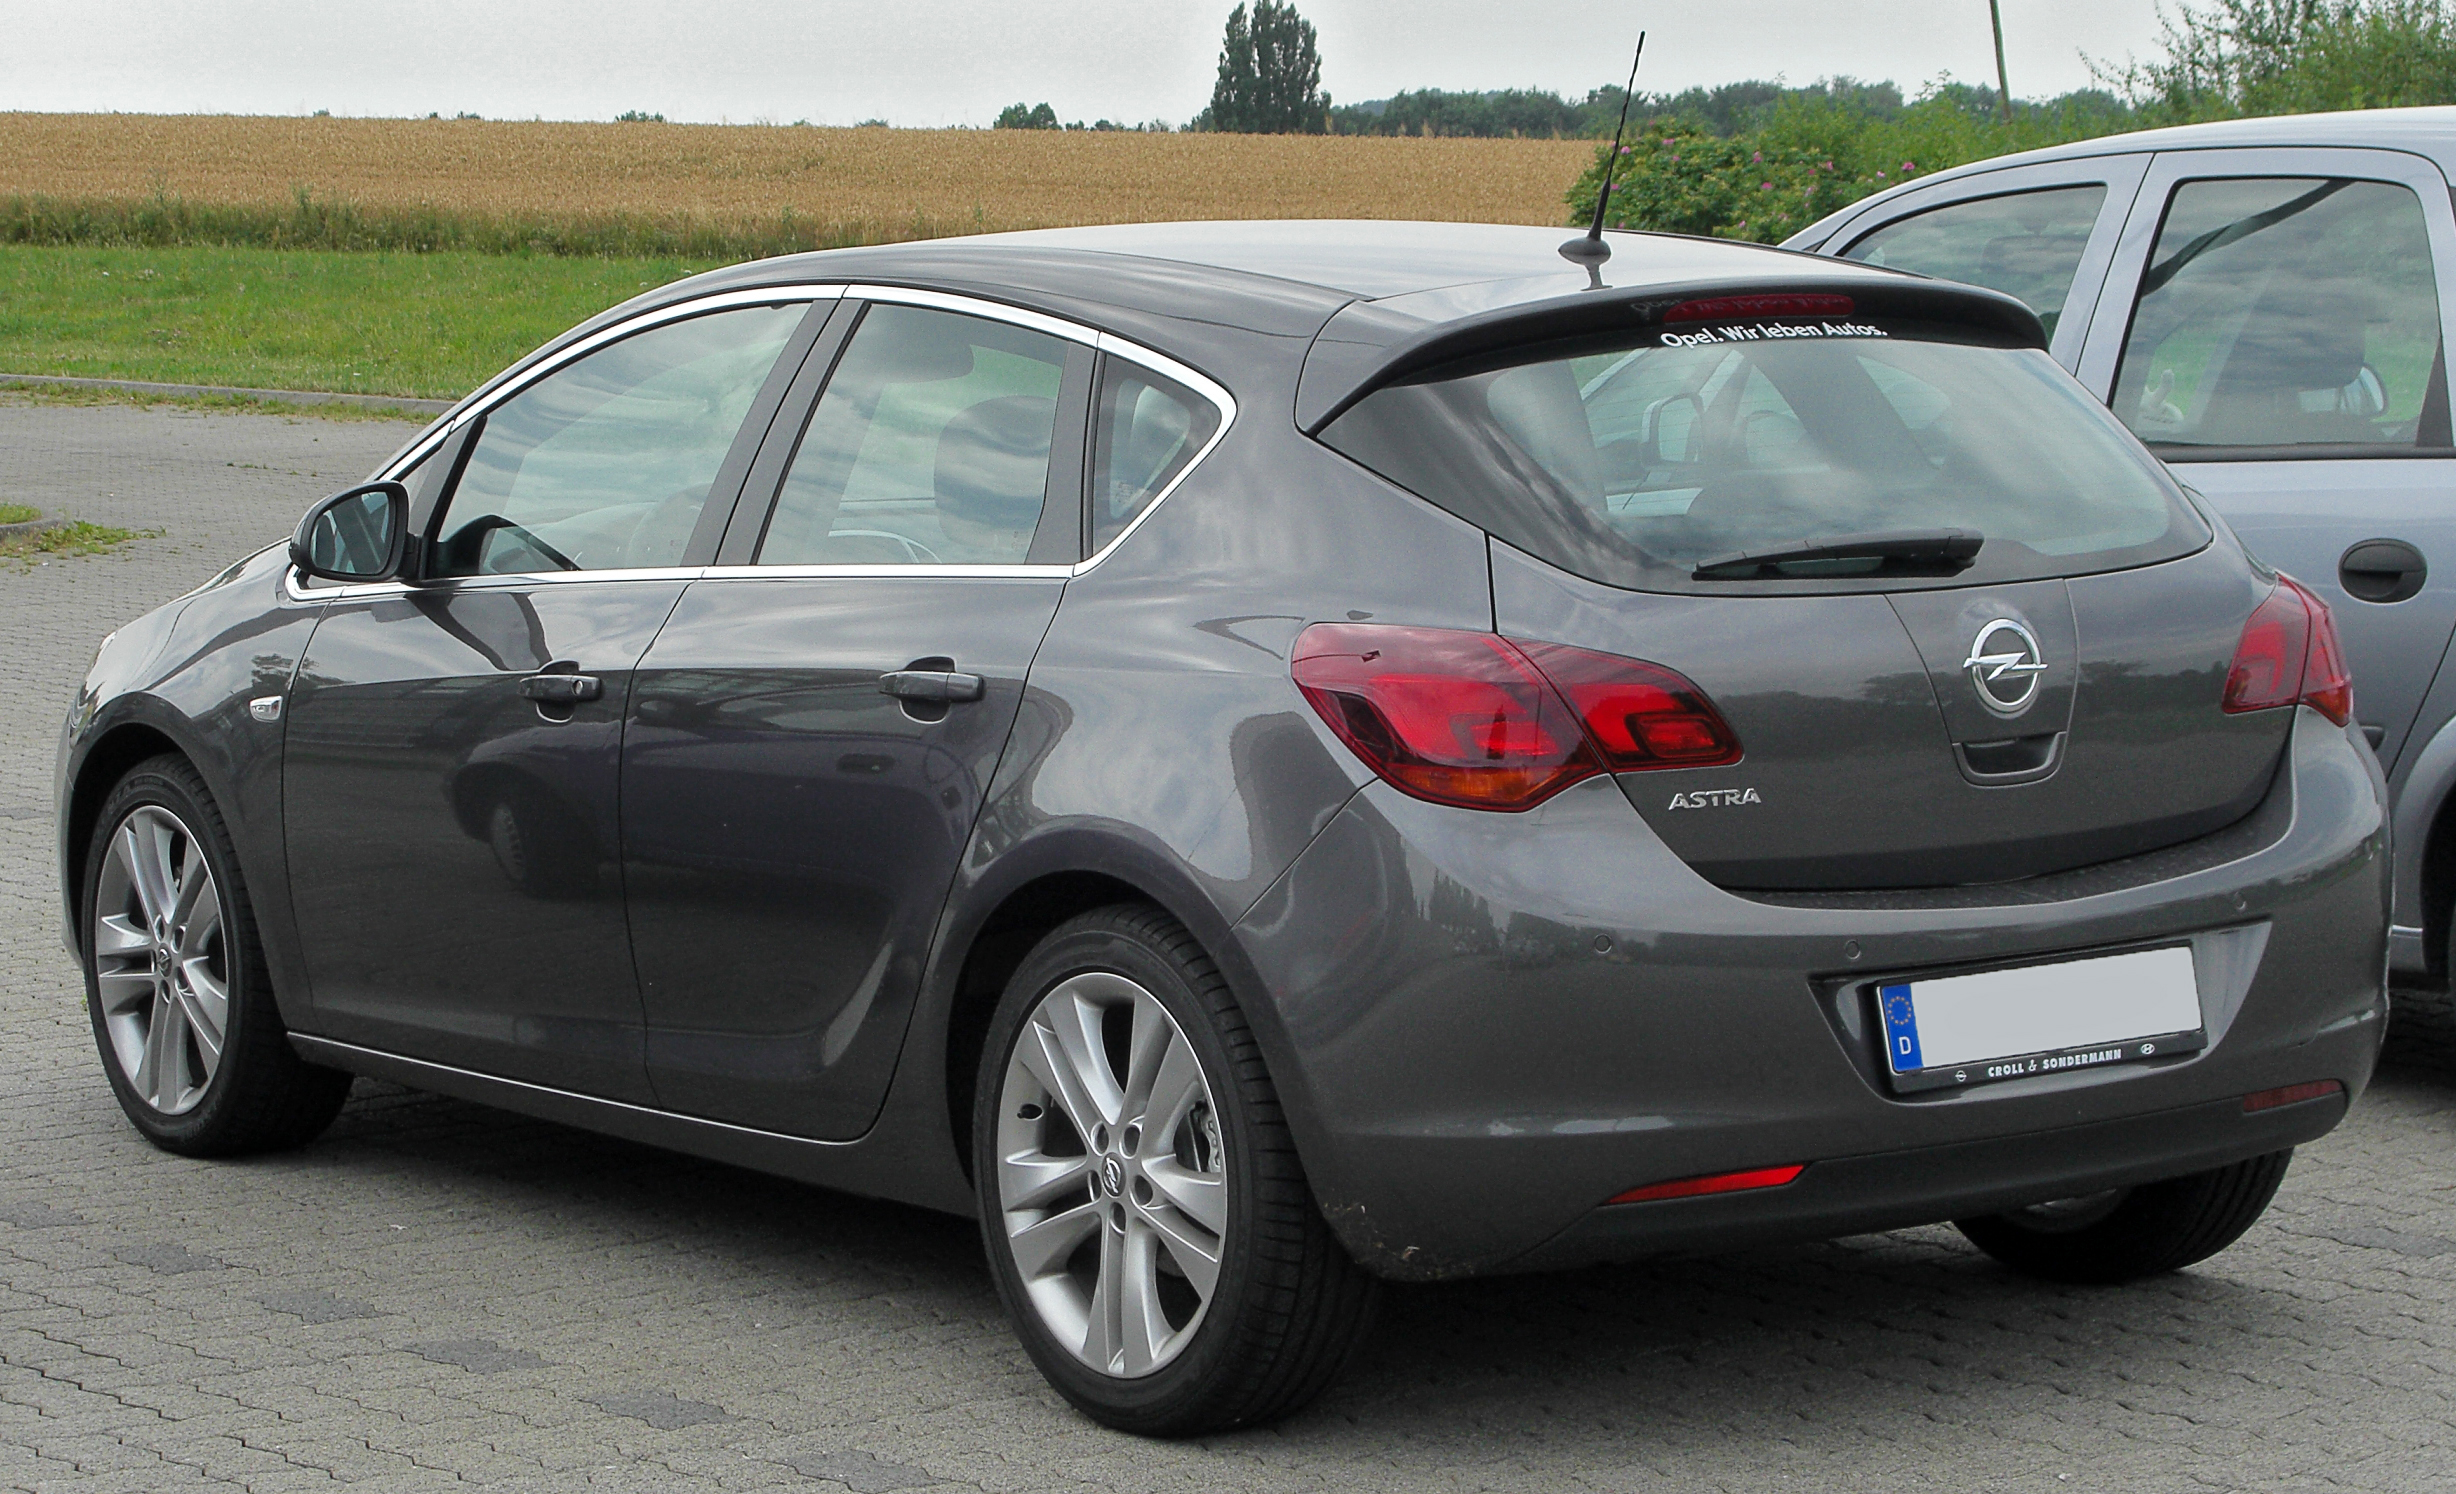 Archivo:Opel Astra J rear-1 20100725.jpg - Wikipedia, la enciclopedia libre